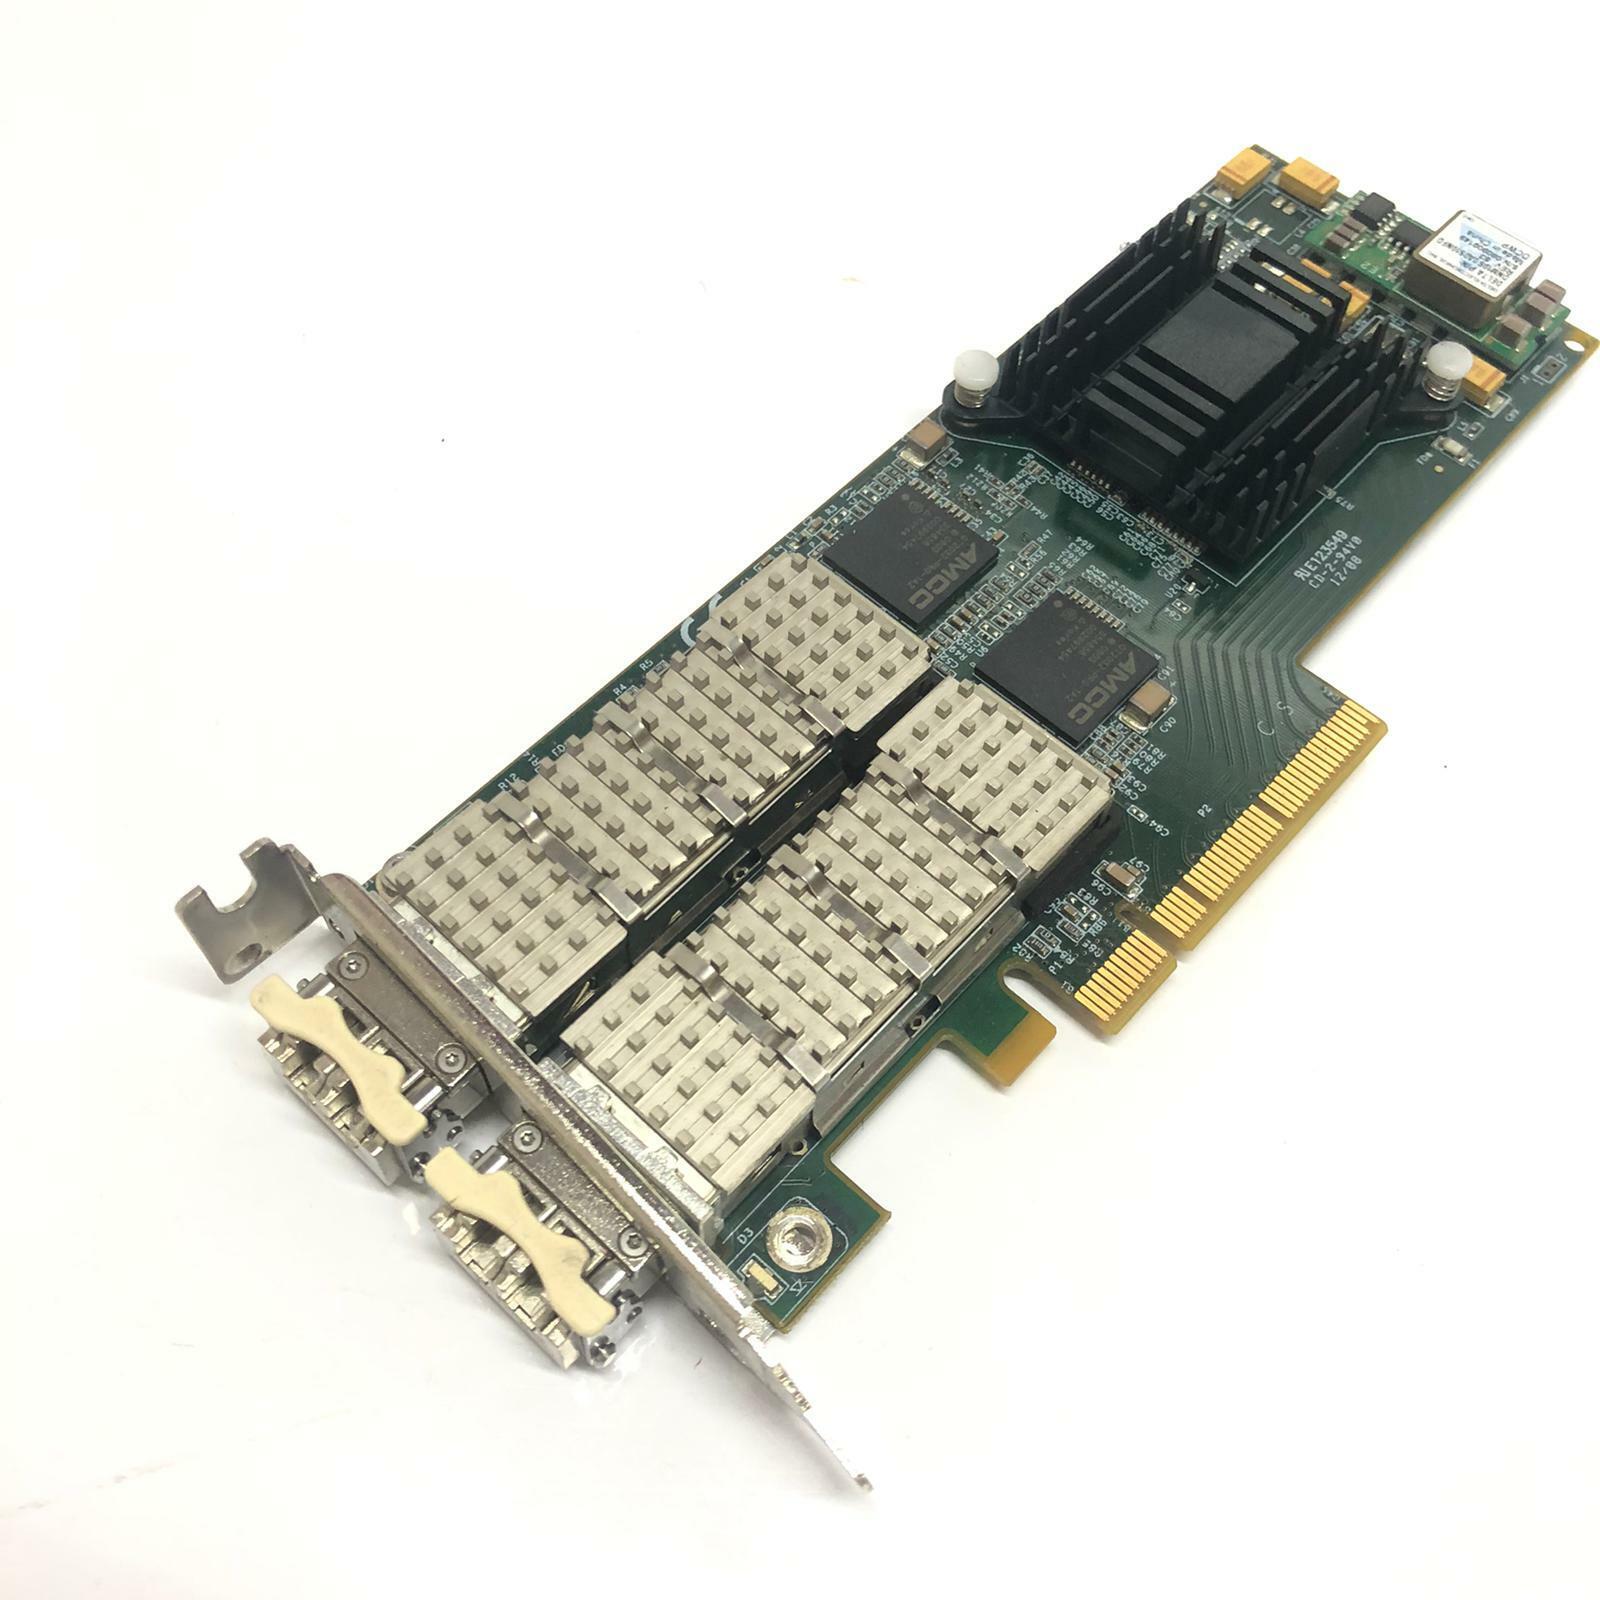 Silicom PE10G2I-SR Dual Port 10GBe PCI-E Ethernet Server Adapter